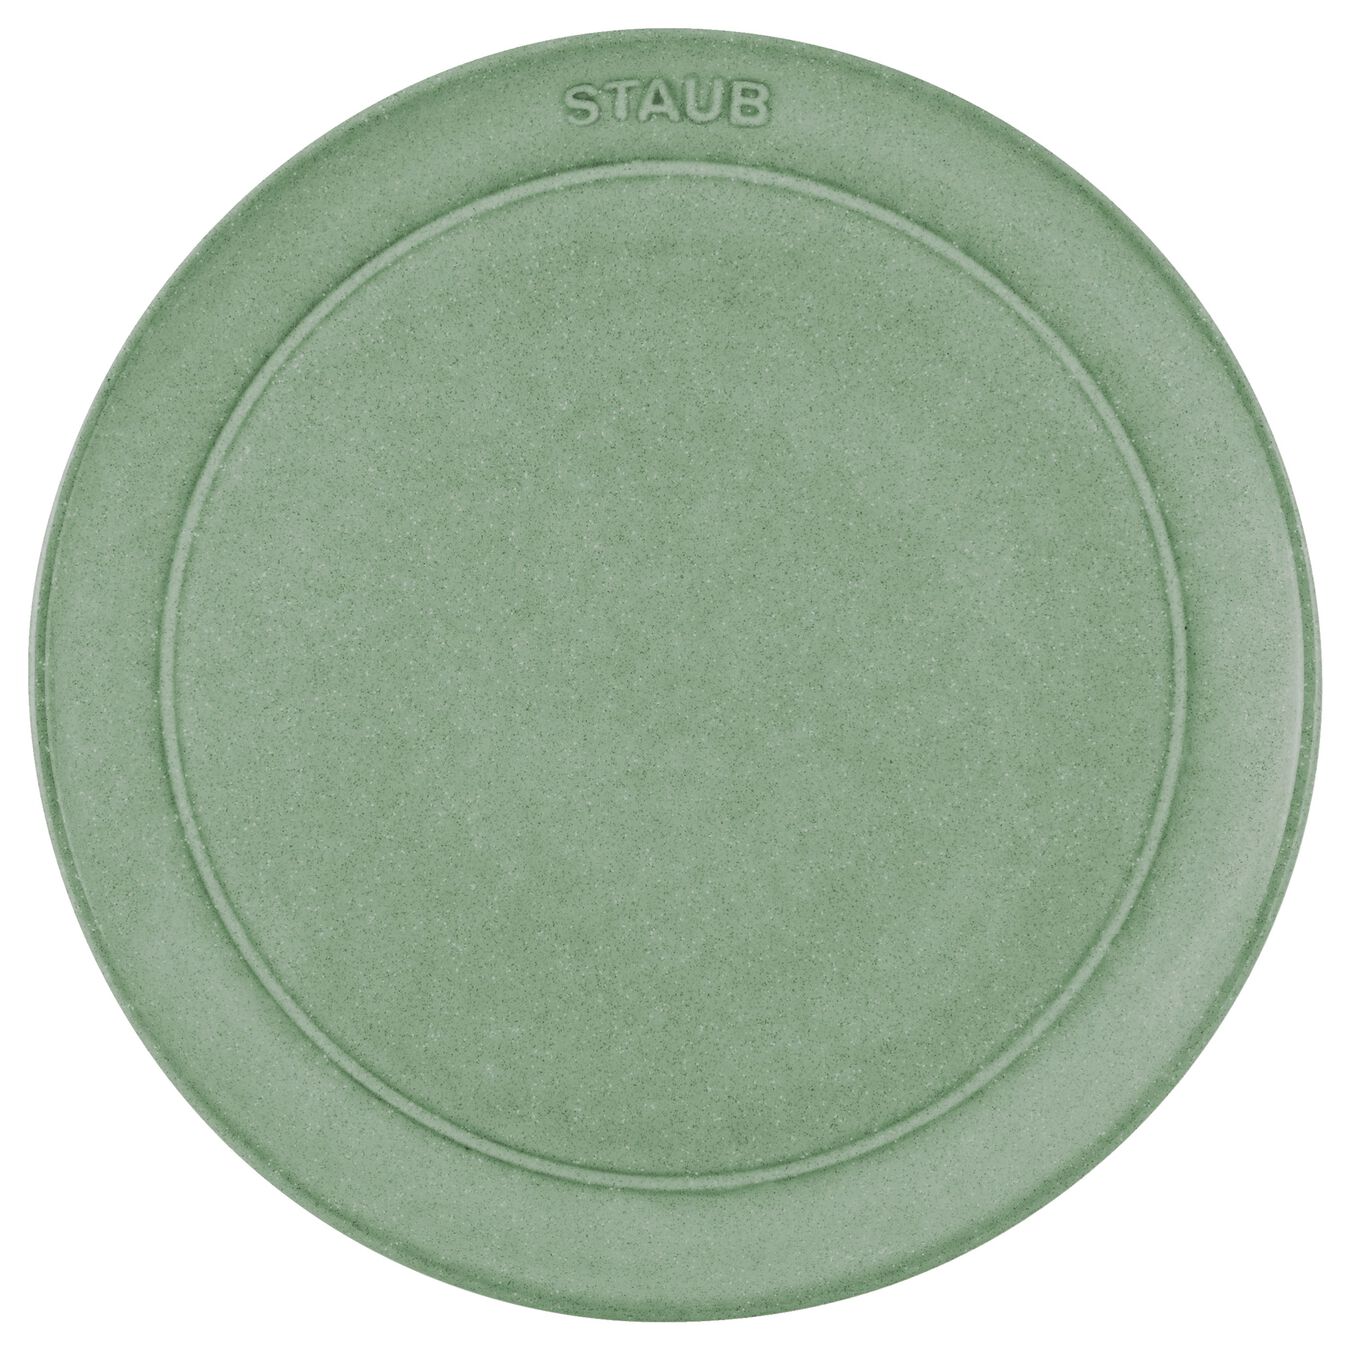 Prato plano 20 cm, Cerâmica, Verde seco,,large 2